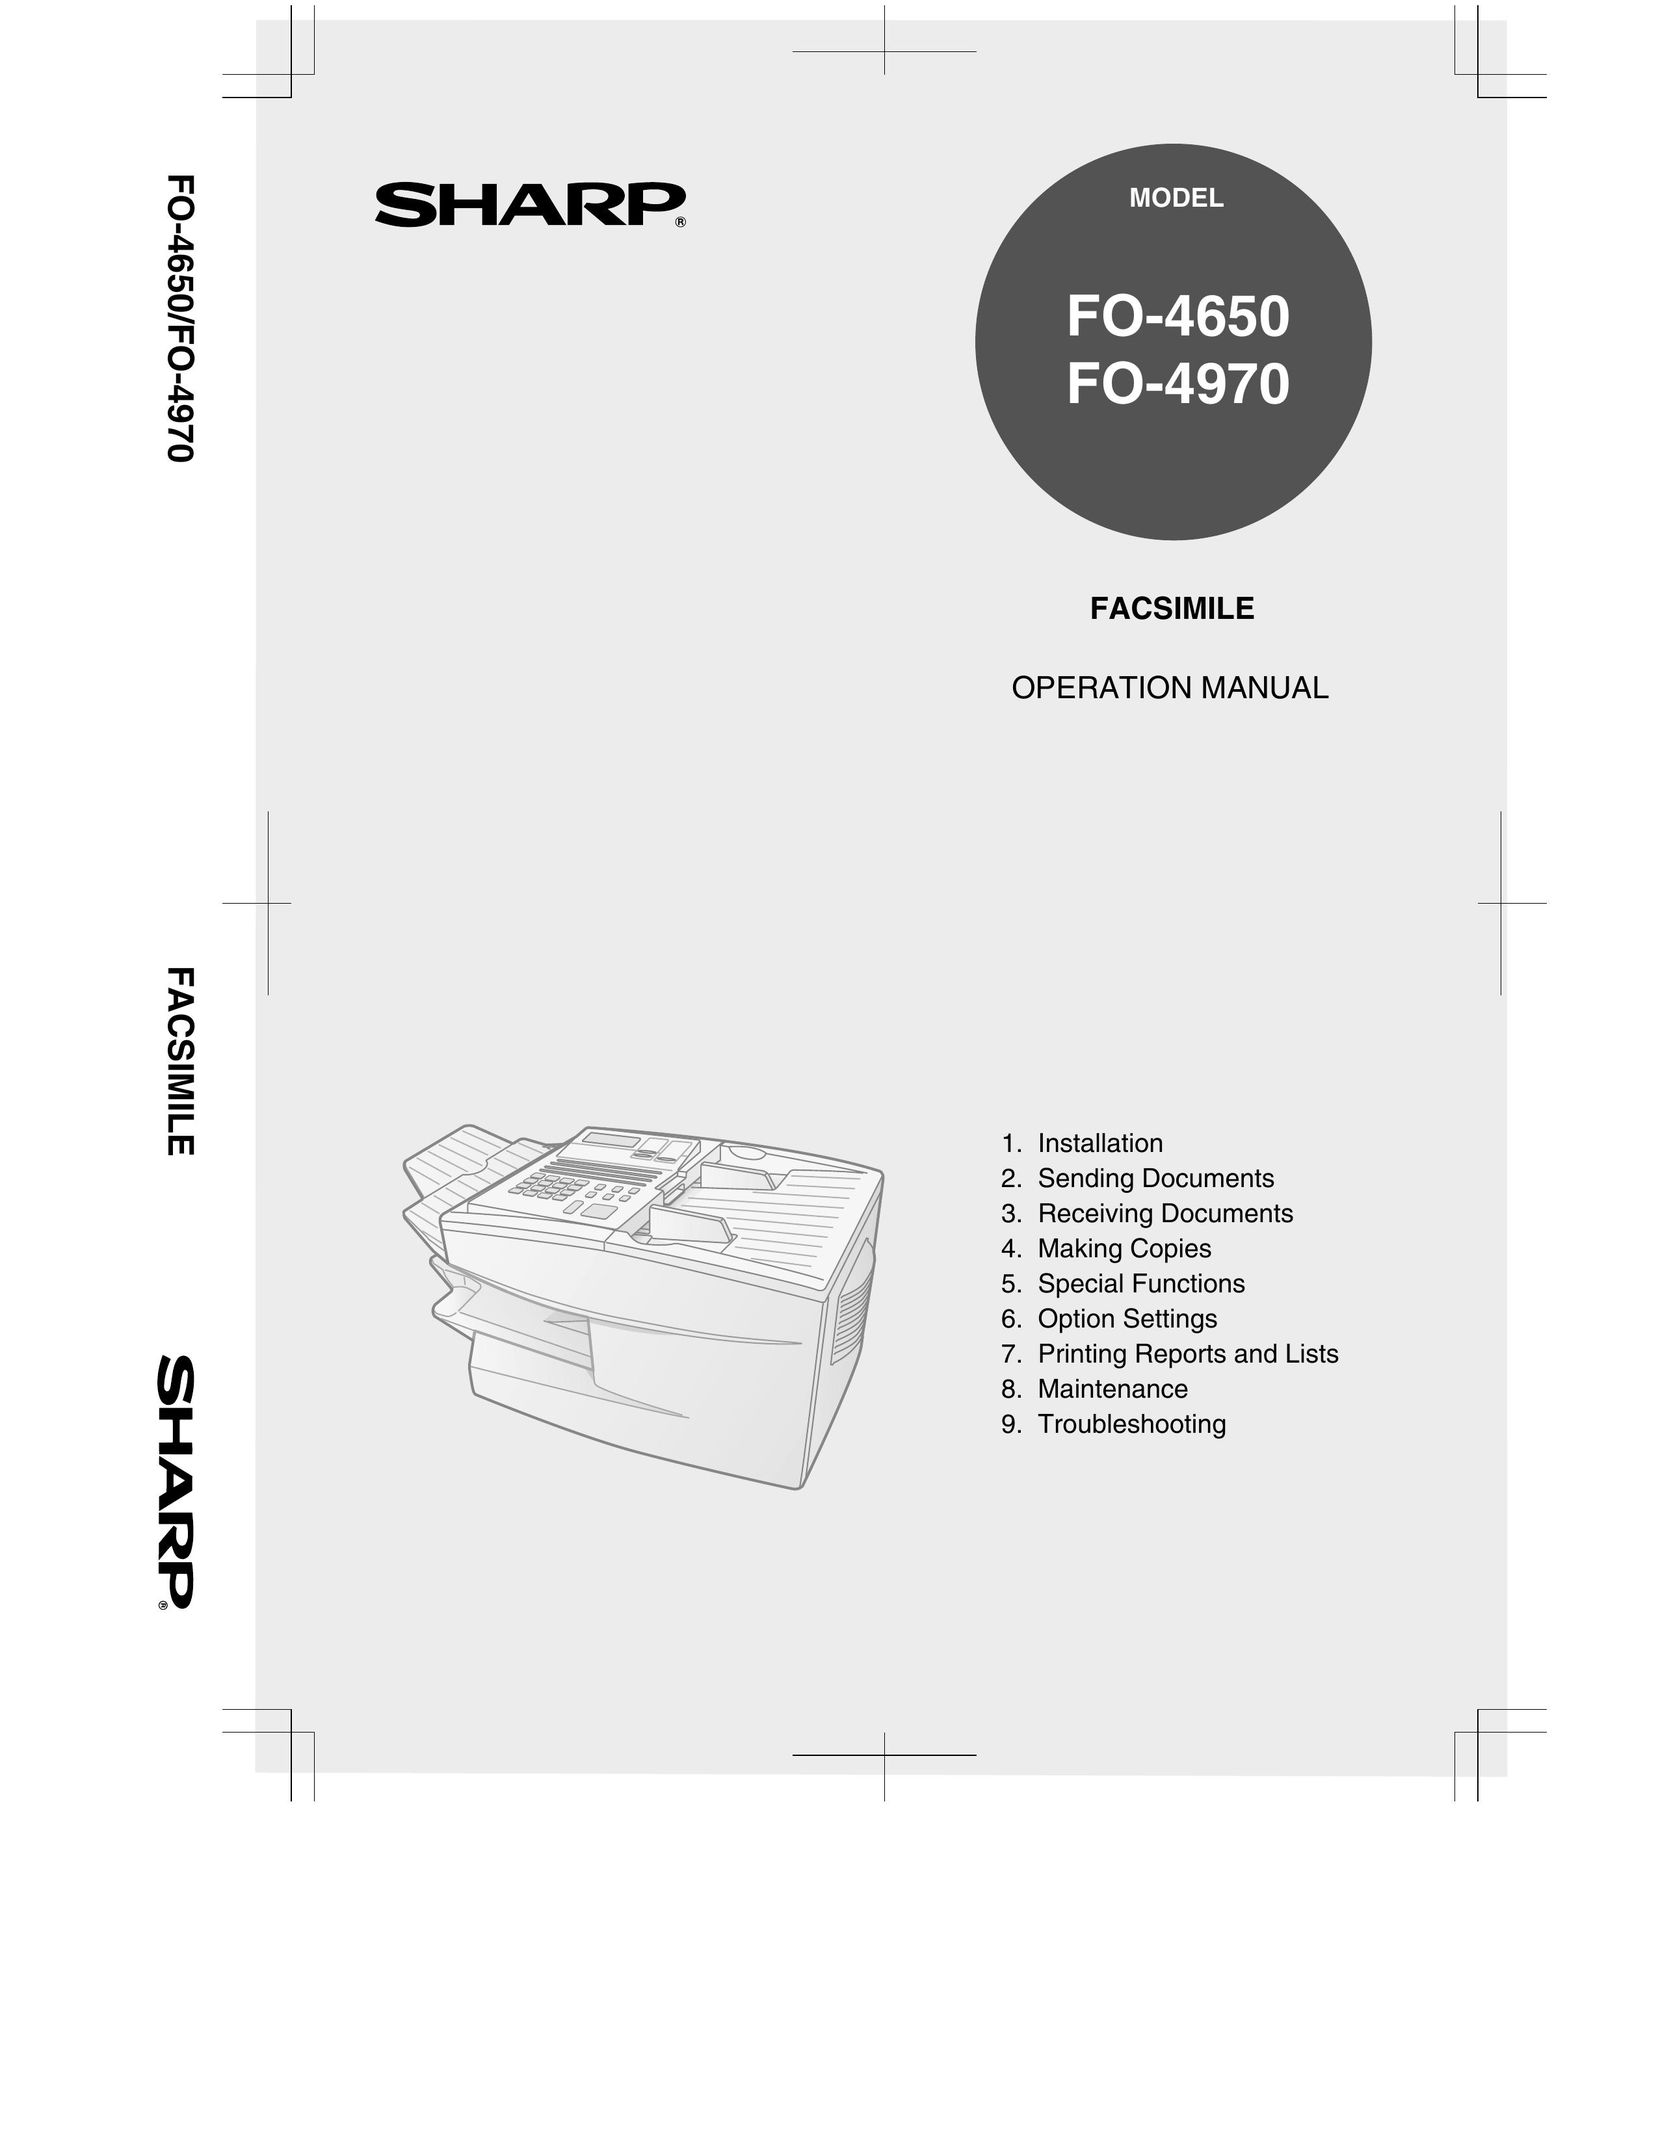 Sharp FO-4650 Fax Machine User Manual